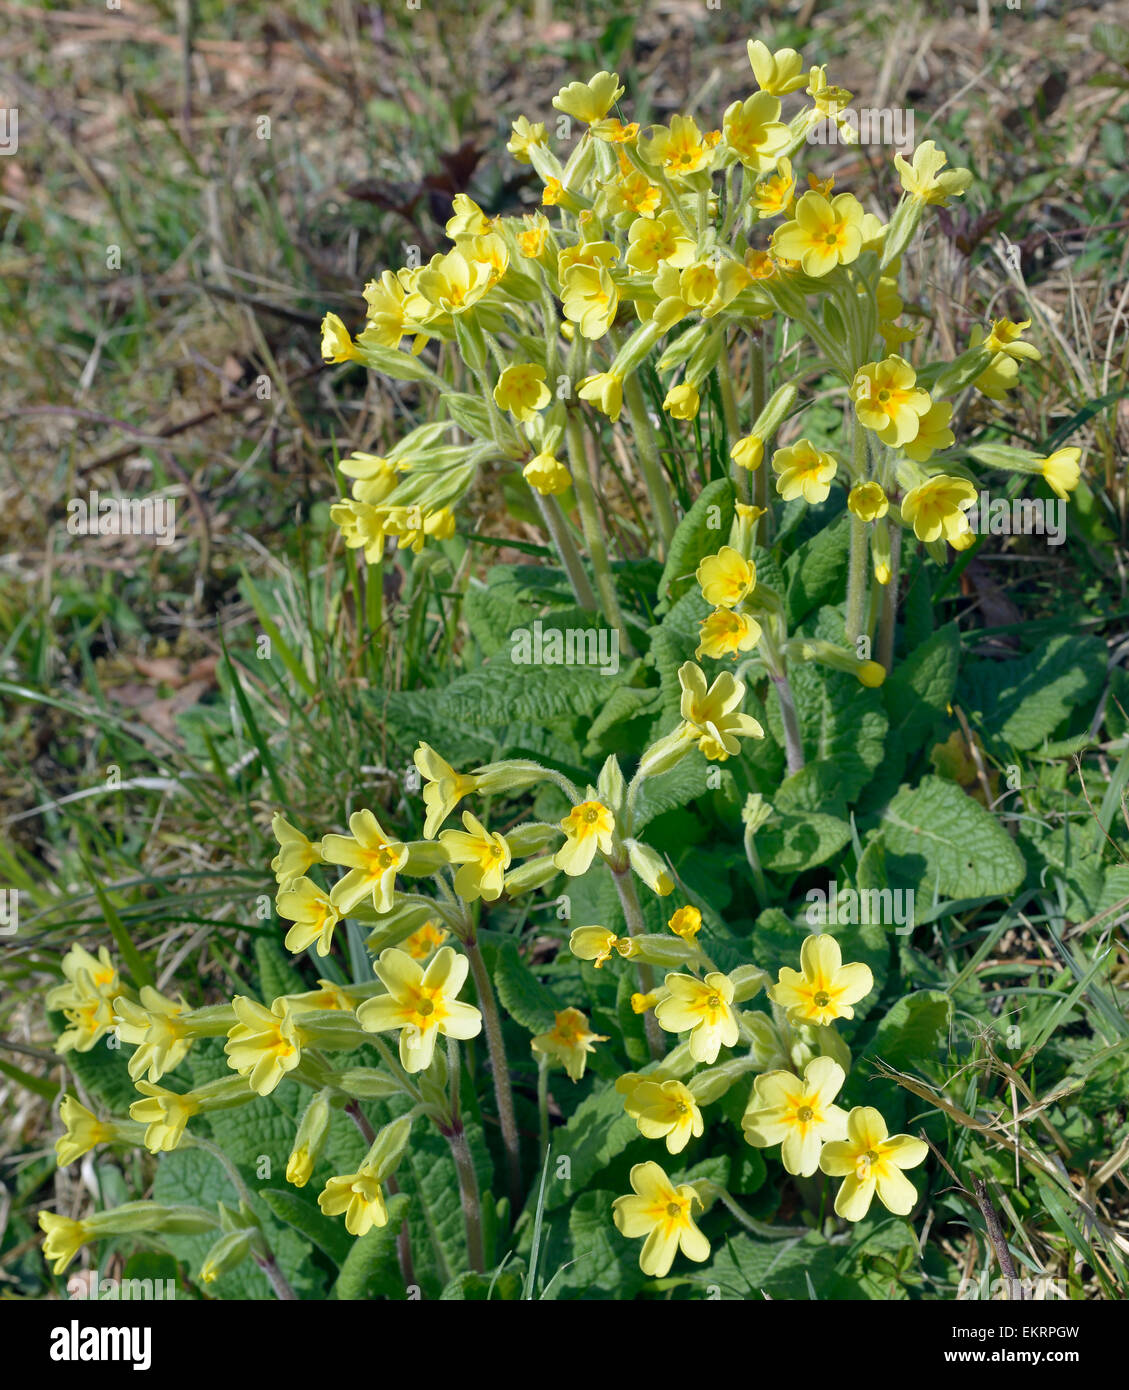 False Oxlip - Primula x polyantha Hybrid of Cowslip & Primrose Stock Photo